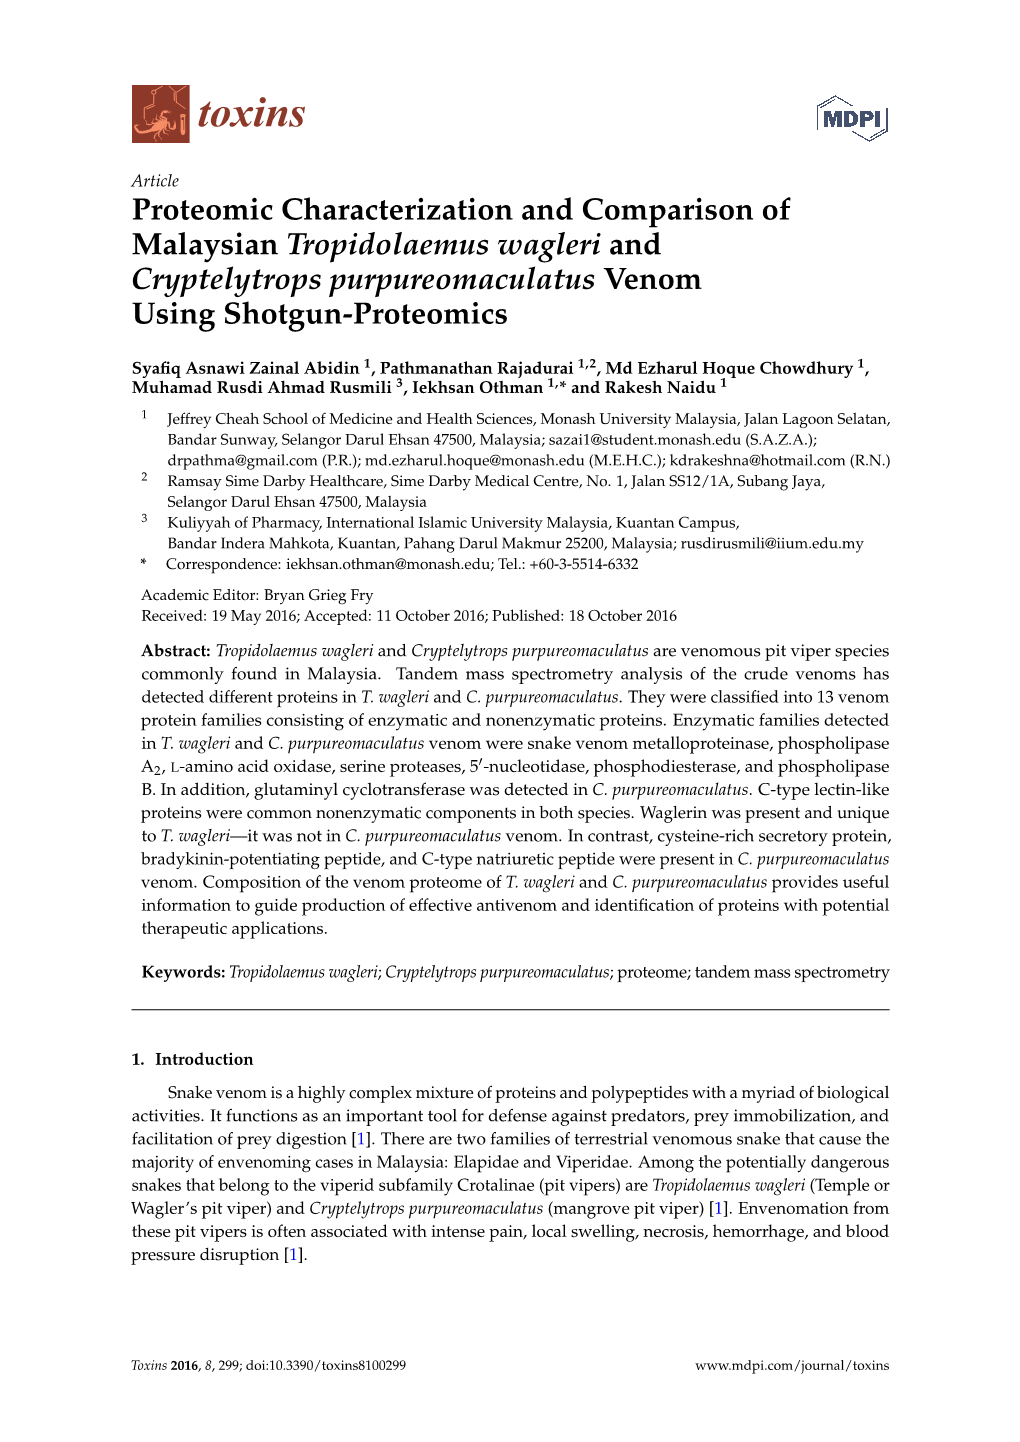 Proteomic Characterization and Comparison of Malaysian Tropidolaemus Wagleri and Cryptelytrops Purpureomaculatus Venom Using Shotgun-Proteomics